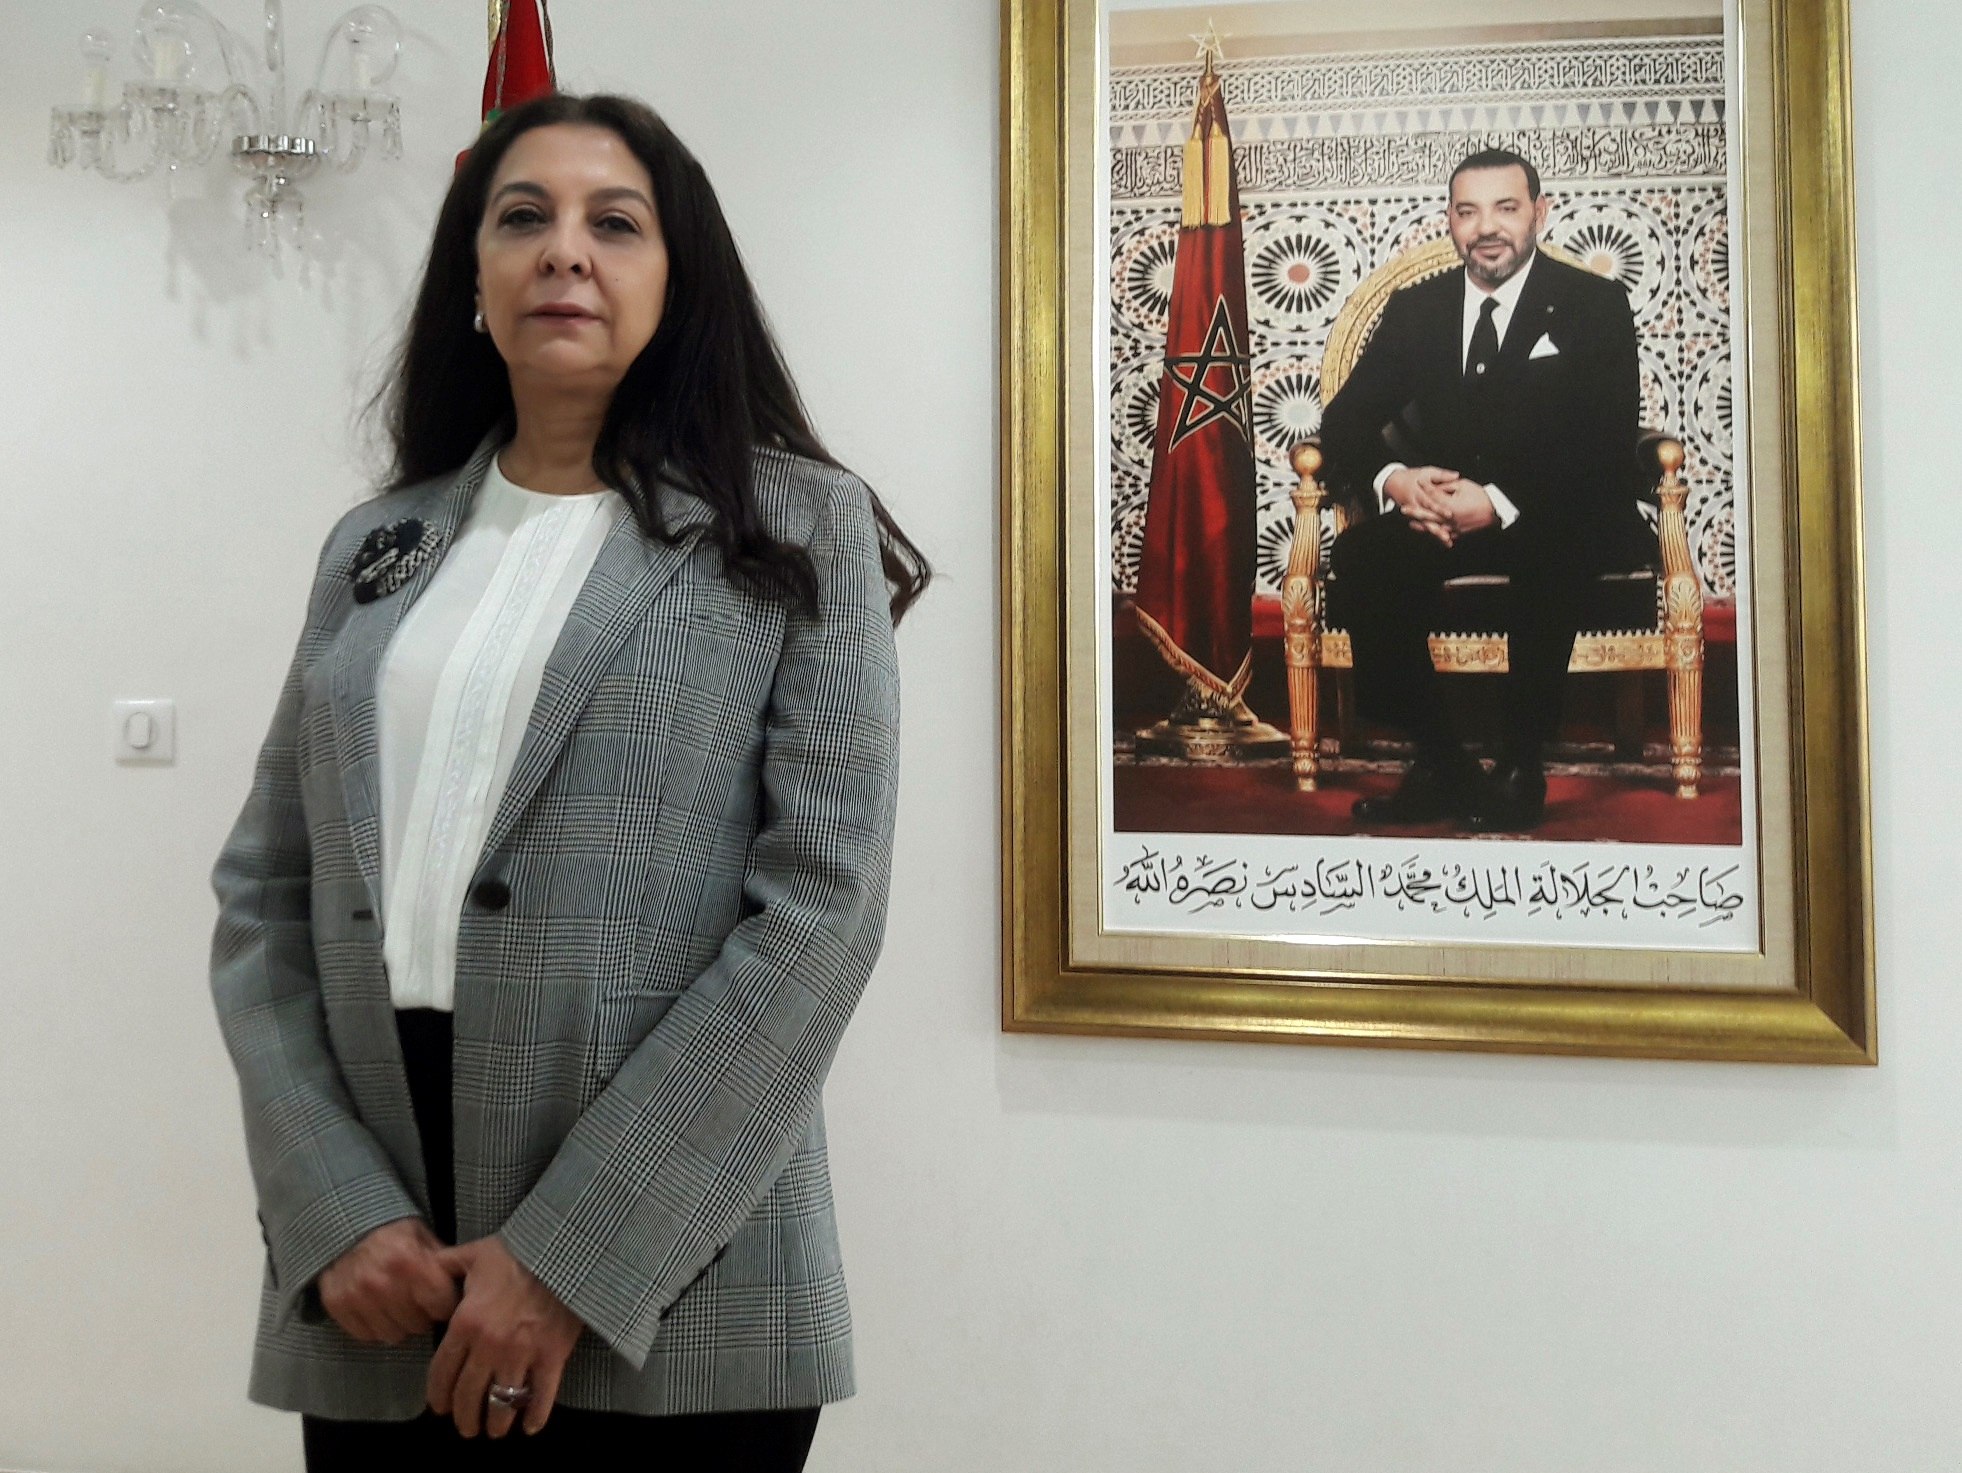 L'ambassadeur du Maroc en Espagne